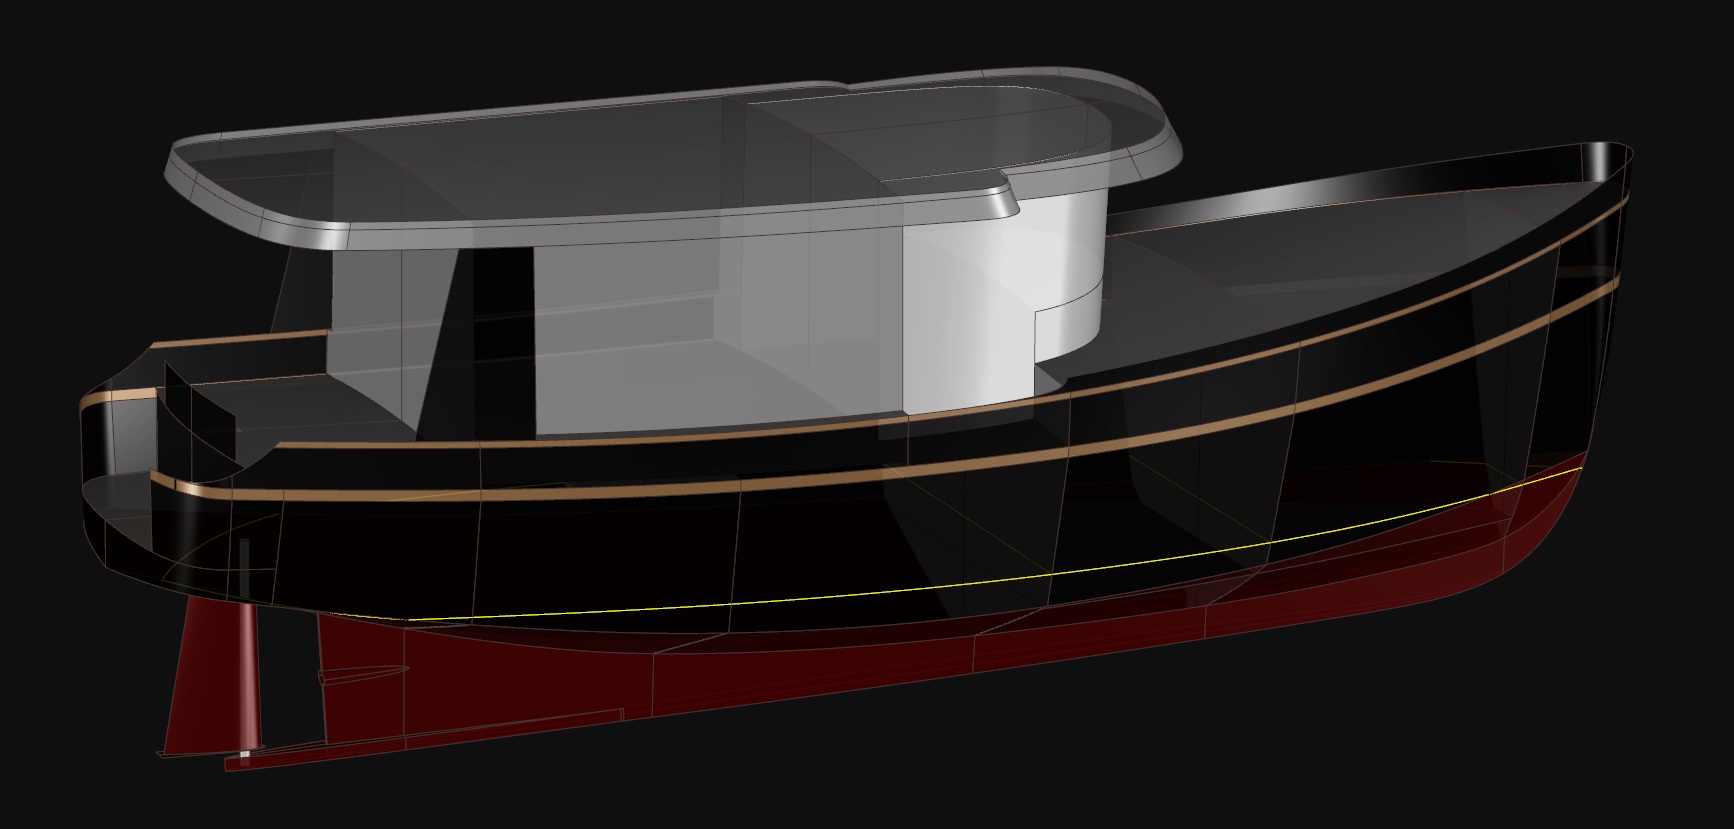 Widebody Dive Yacht PETREL - Kasten Marine Design, Inc.